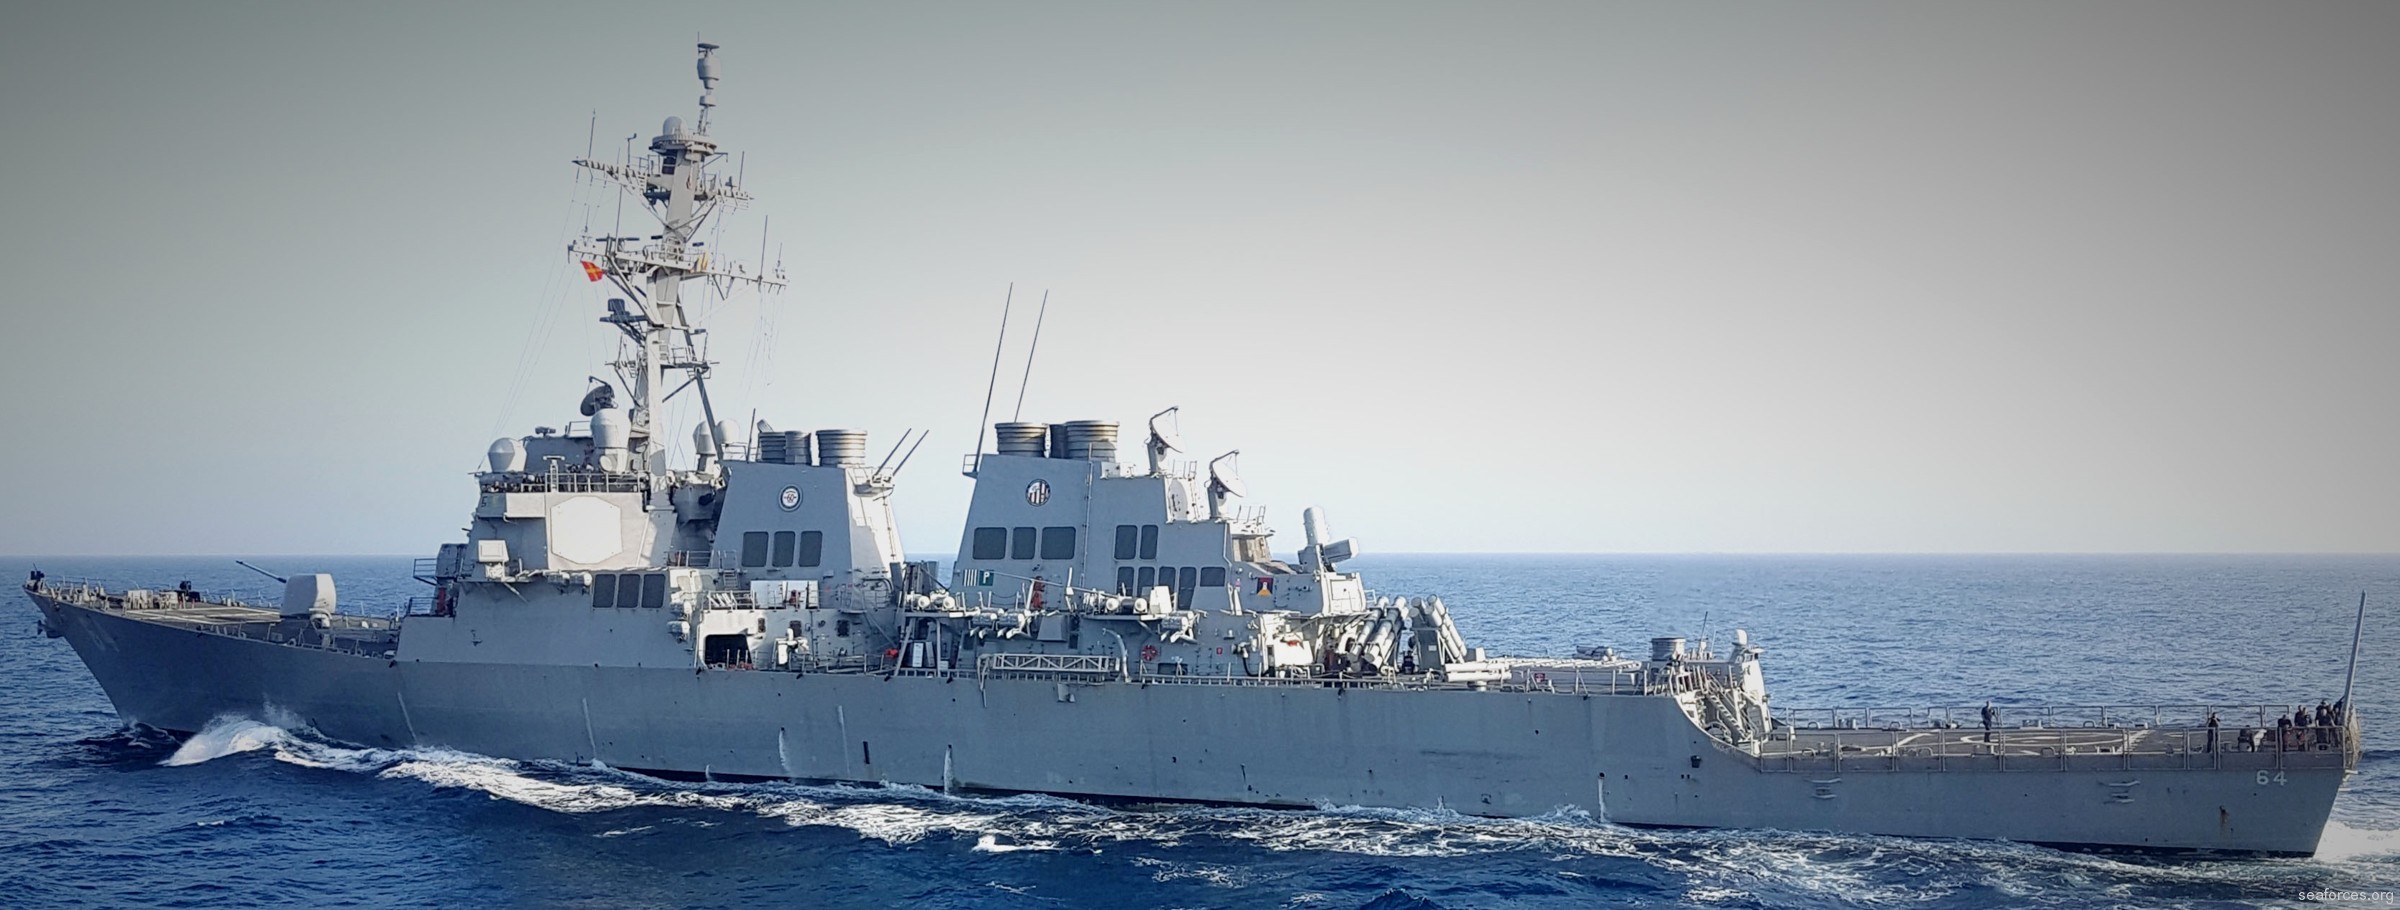 ddg-64 uss carney destroyer arleigh burke class navy 37